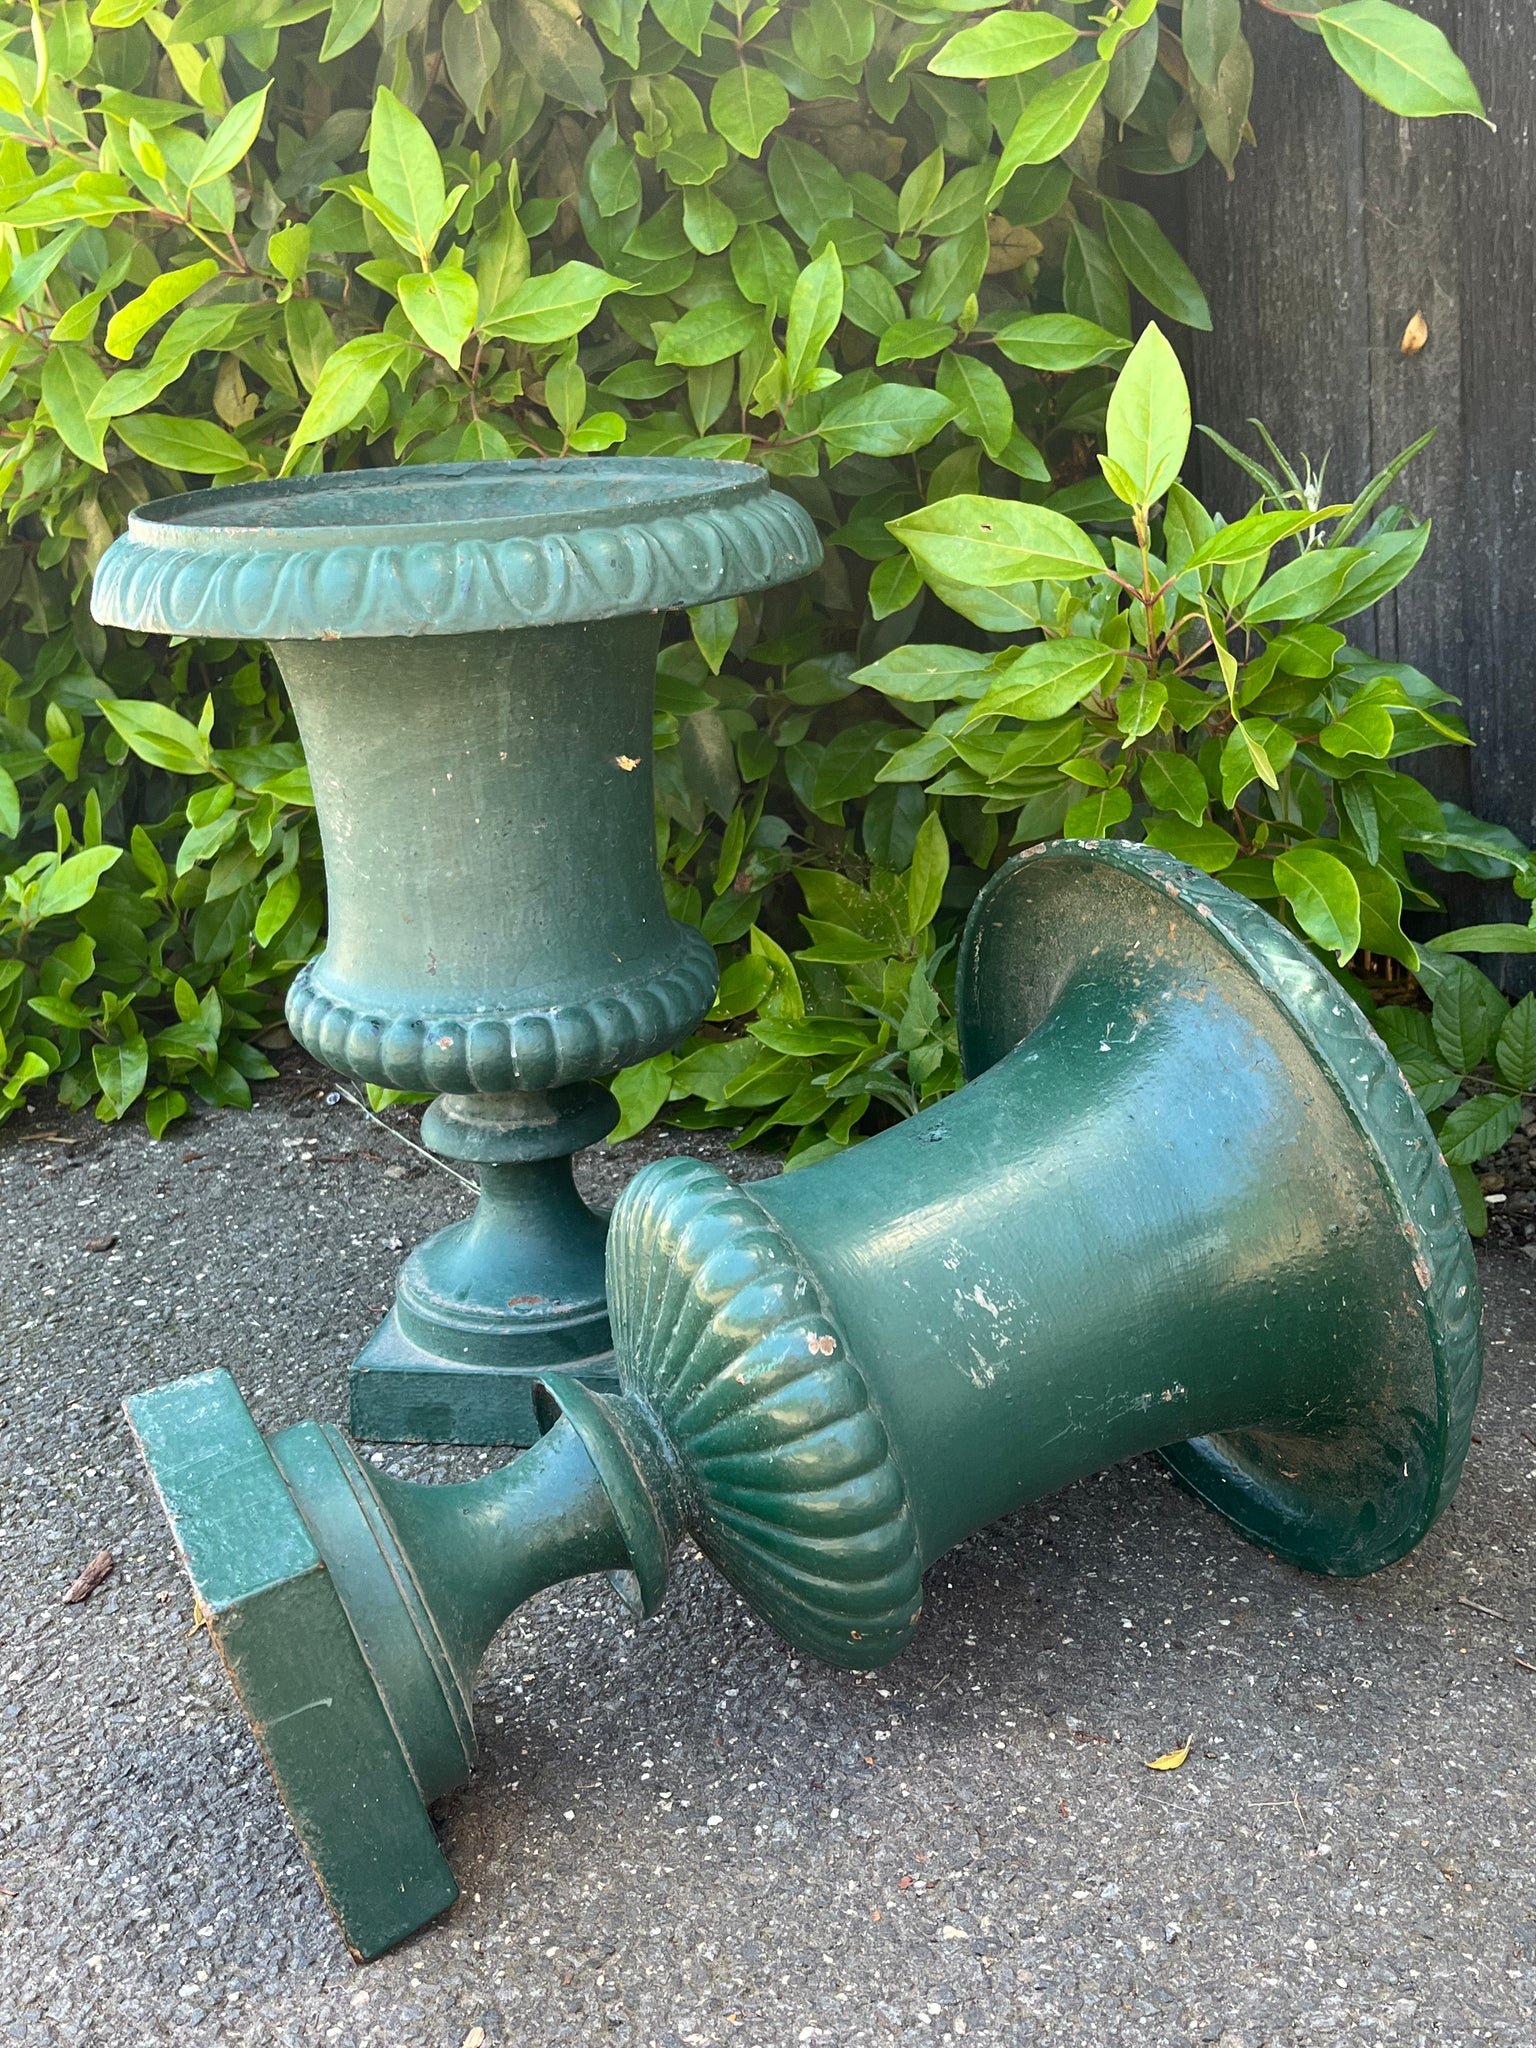 A pair of Antique cast iron urn